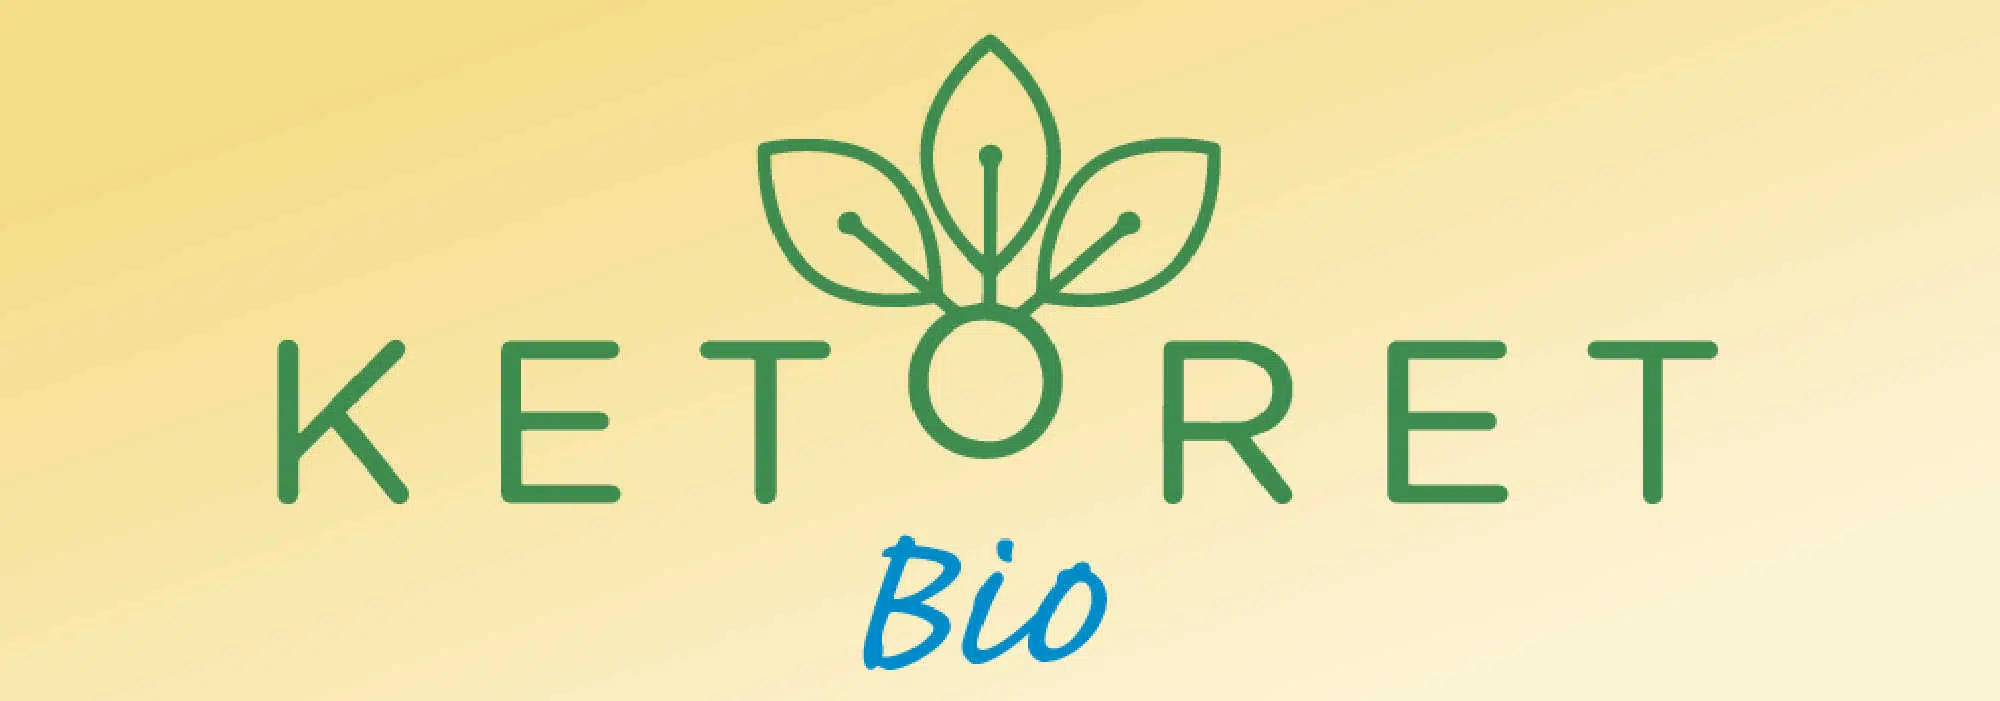 image of ketoret bio logo